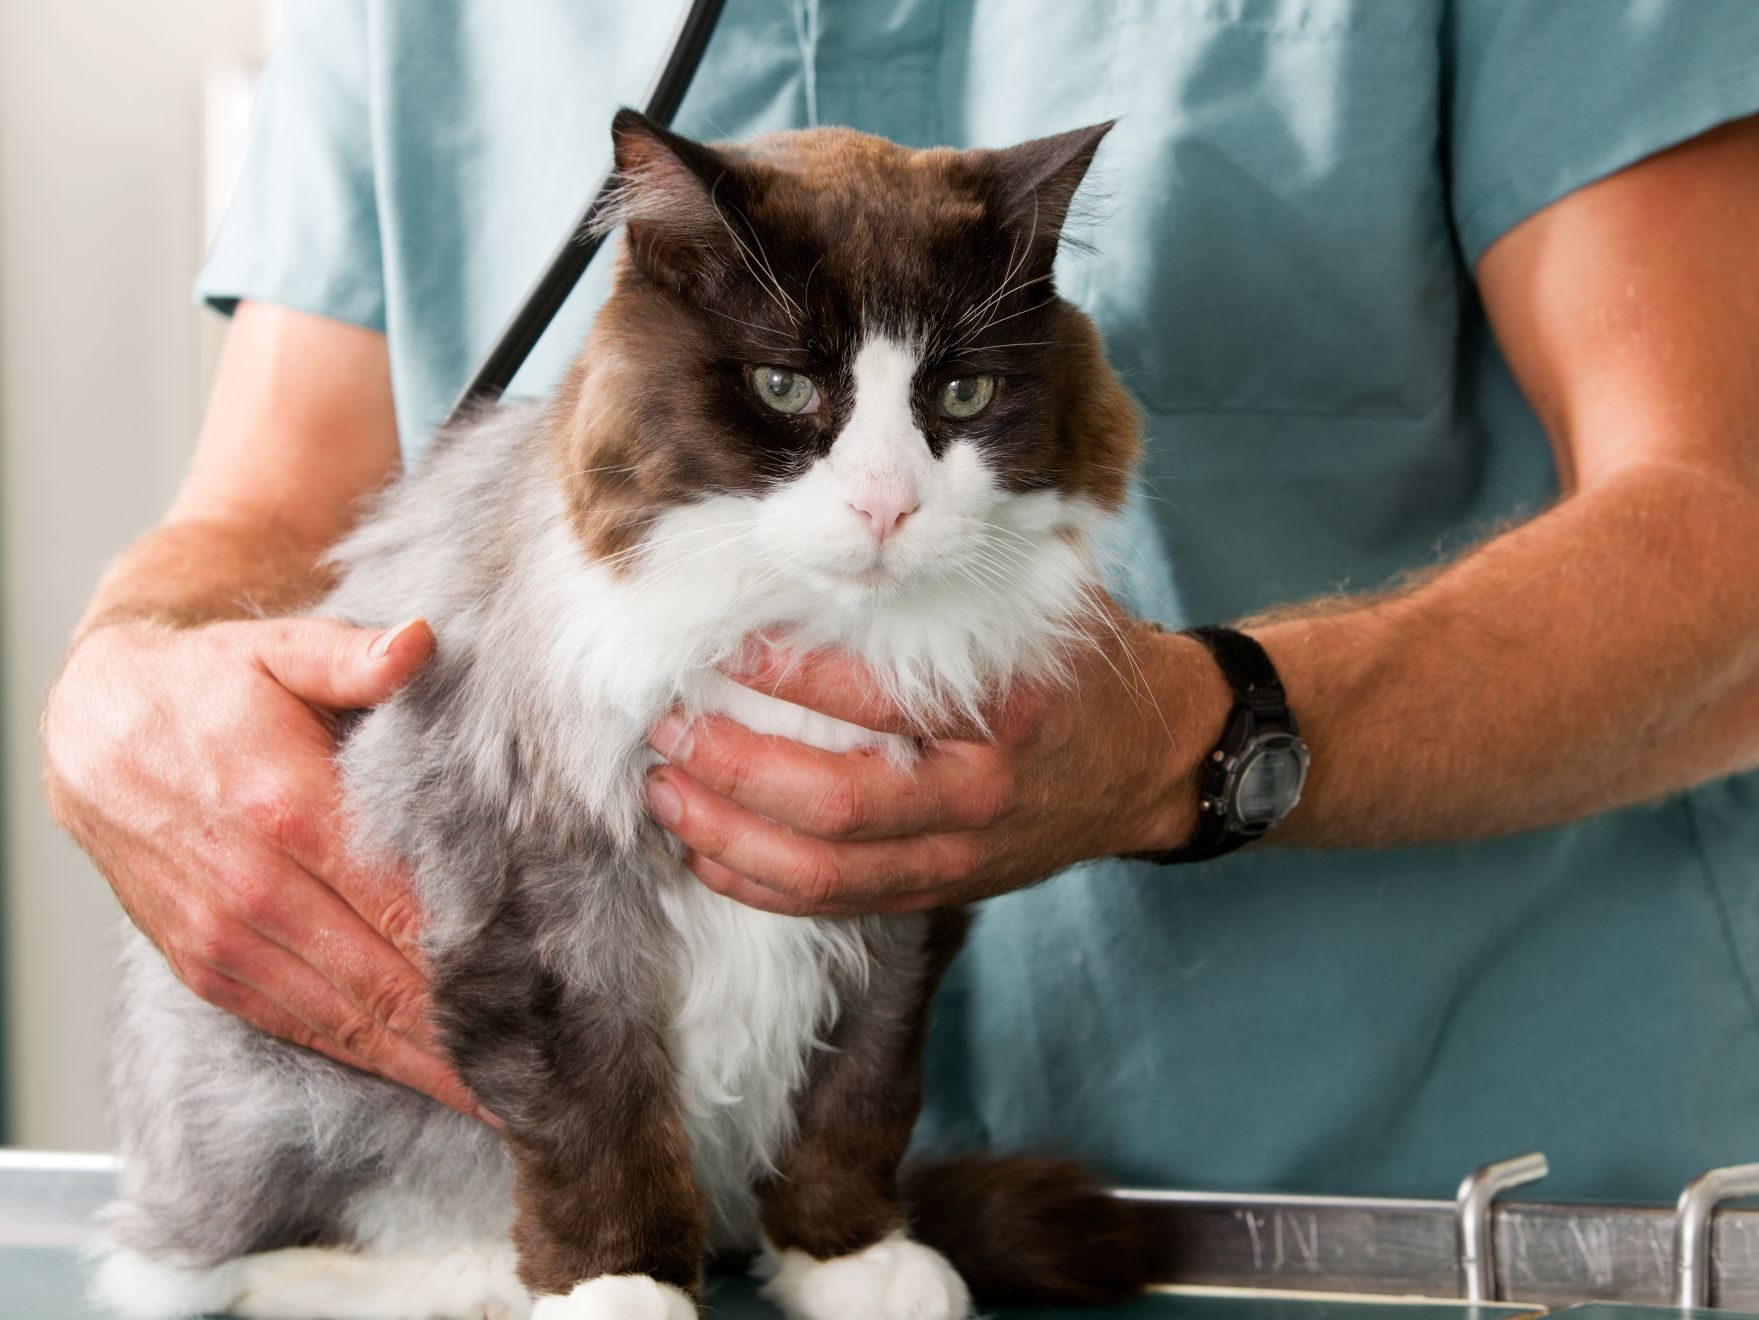 Veterinarian holding a cat